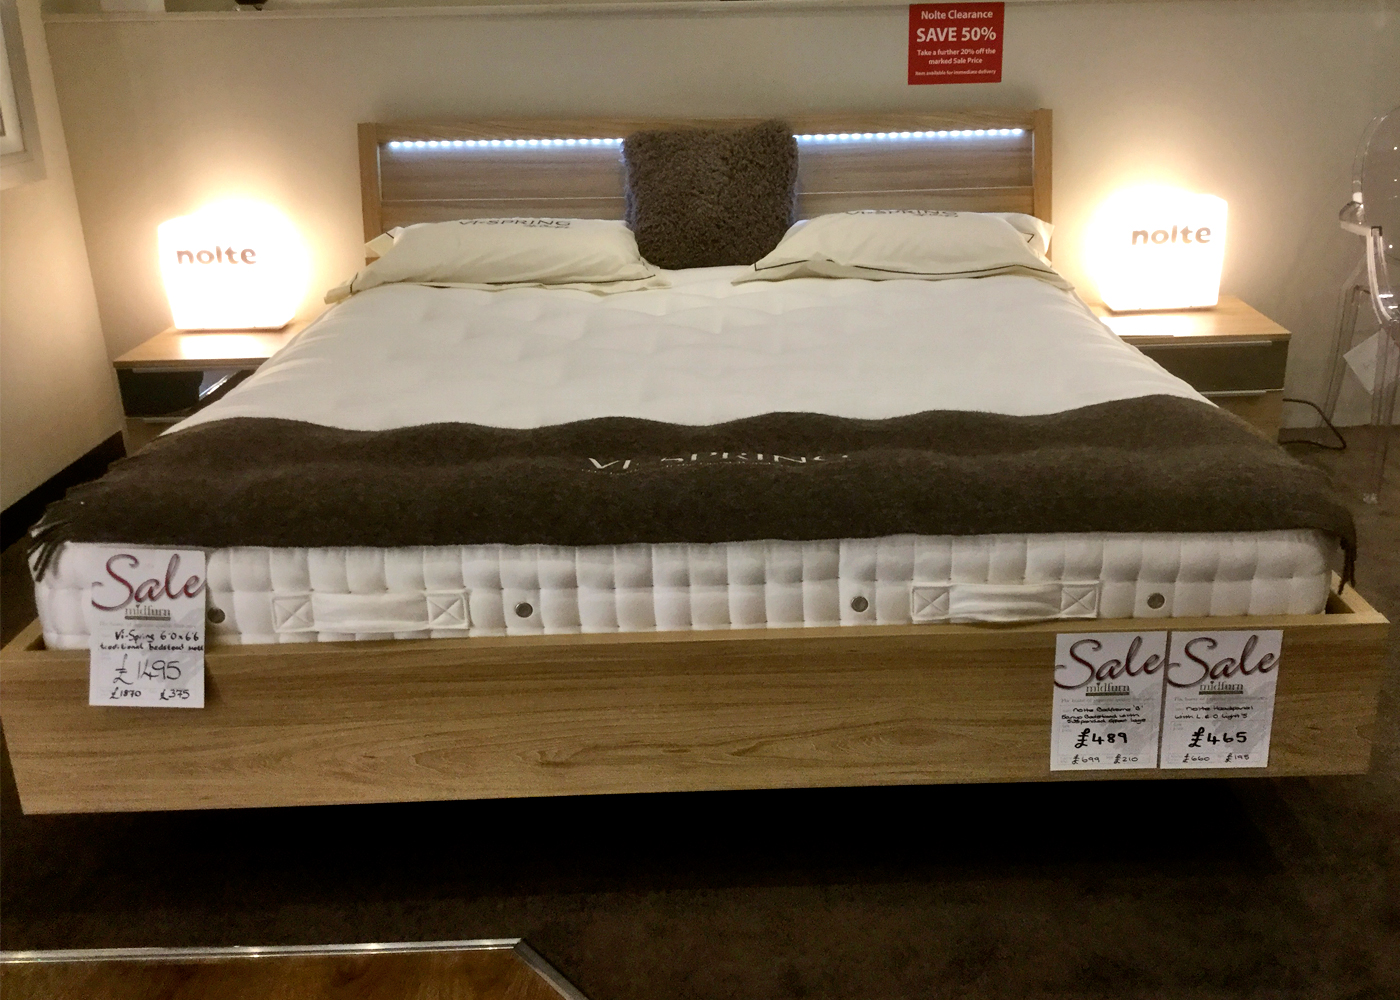 Nolte Sonyo super king size bed - Midfurn Furniture Superstore